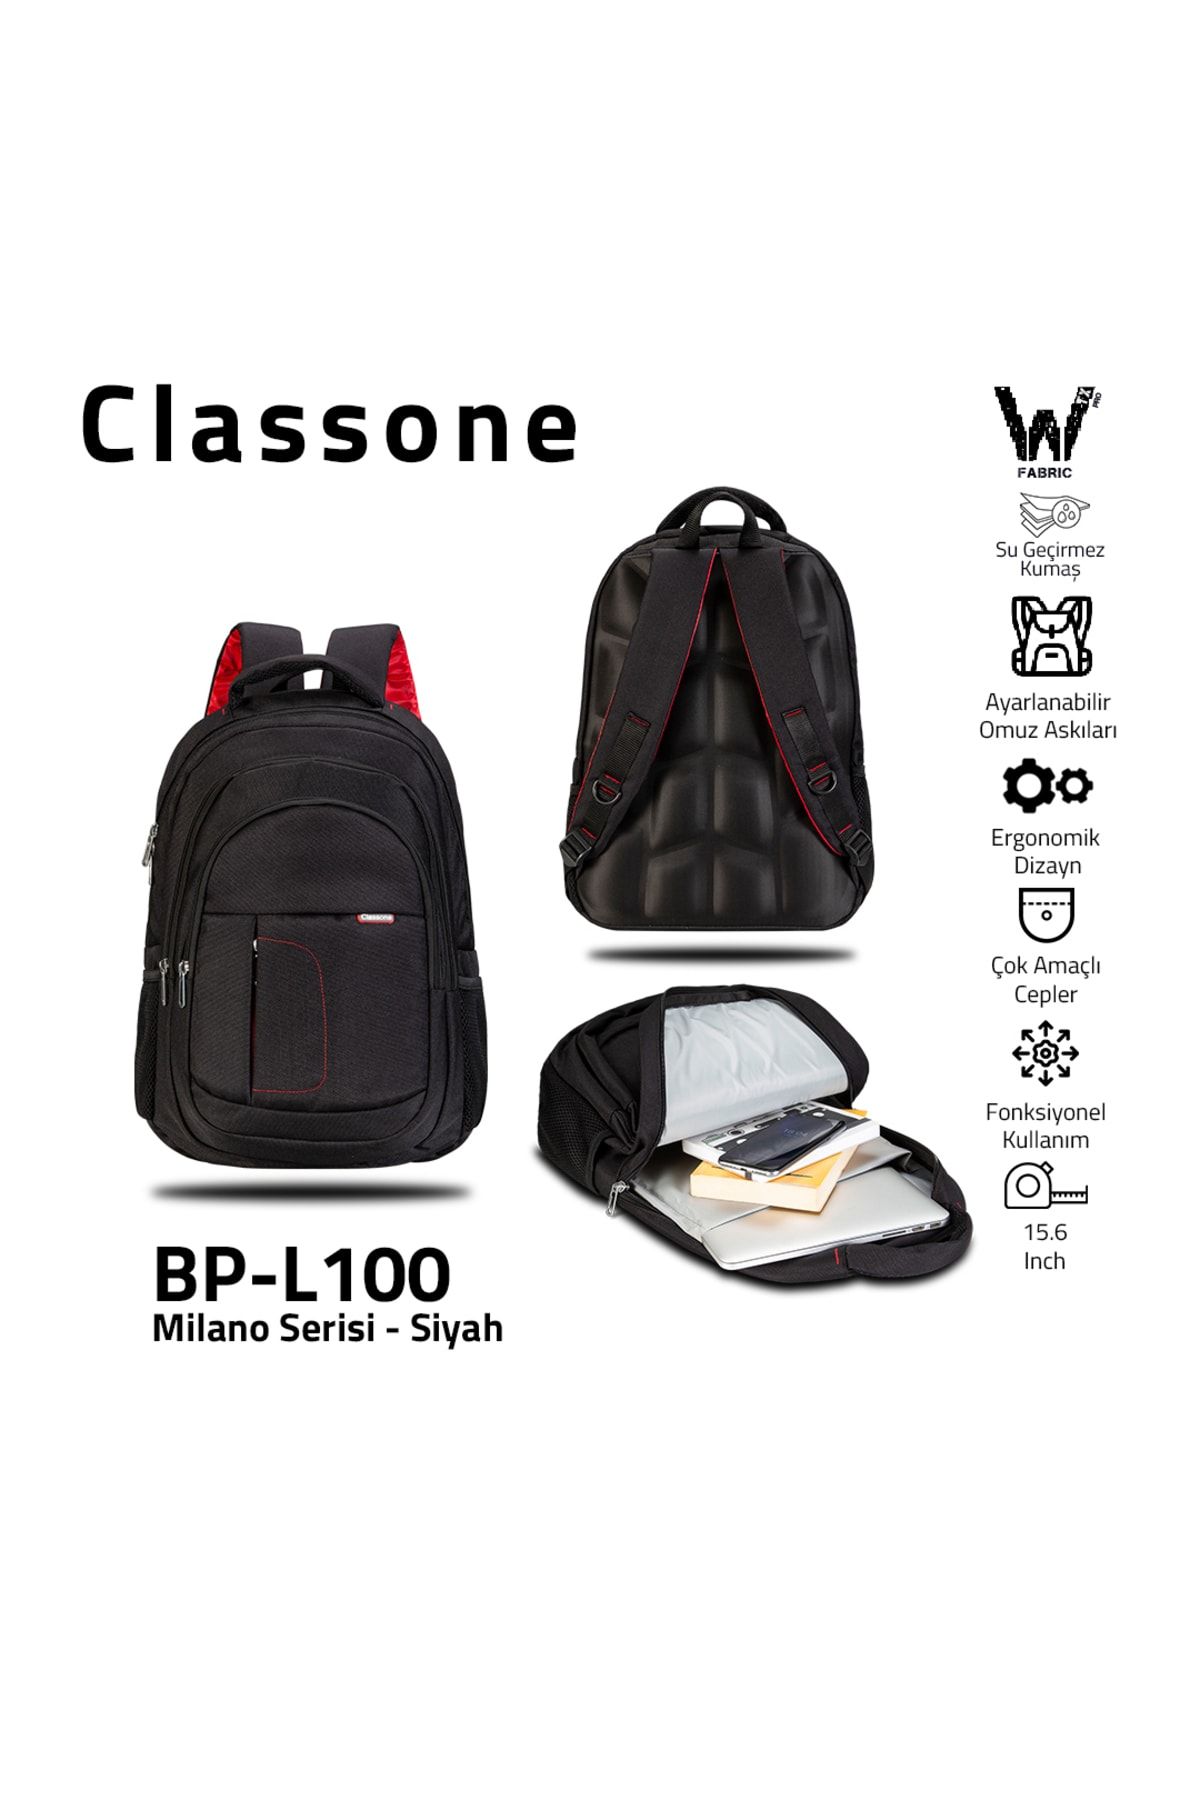 Classone BP-L100 Milano Serisi " WTXpro Su Geçirmez Kumaş 15,6" Notebook, Laptop Sırt Çantası - Siyah